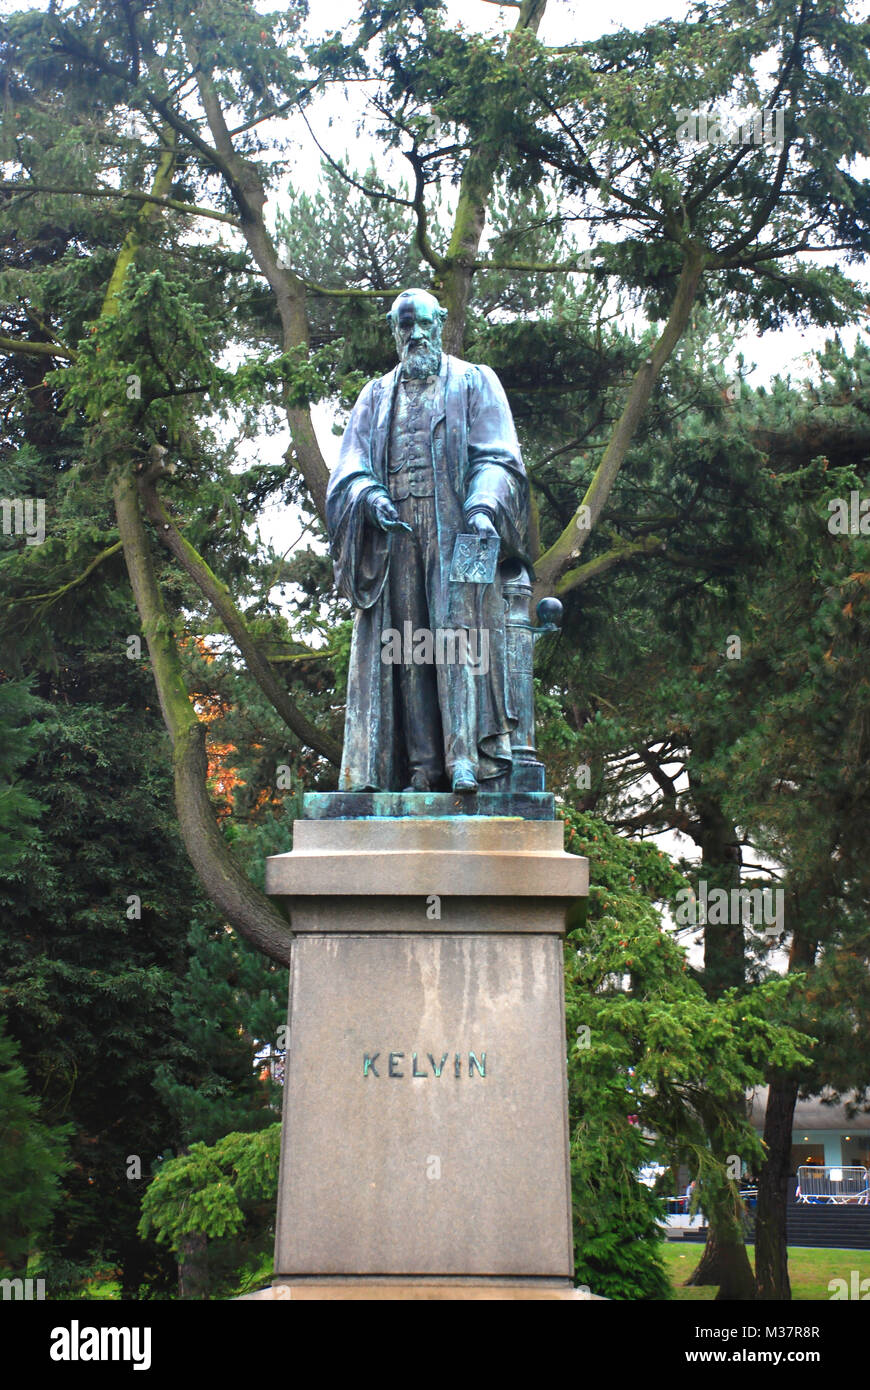 Lord Kelvin Statue in Botanic Gardens, Belfast, Northern Ireland, UK Stock Photo